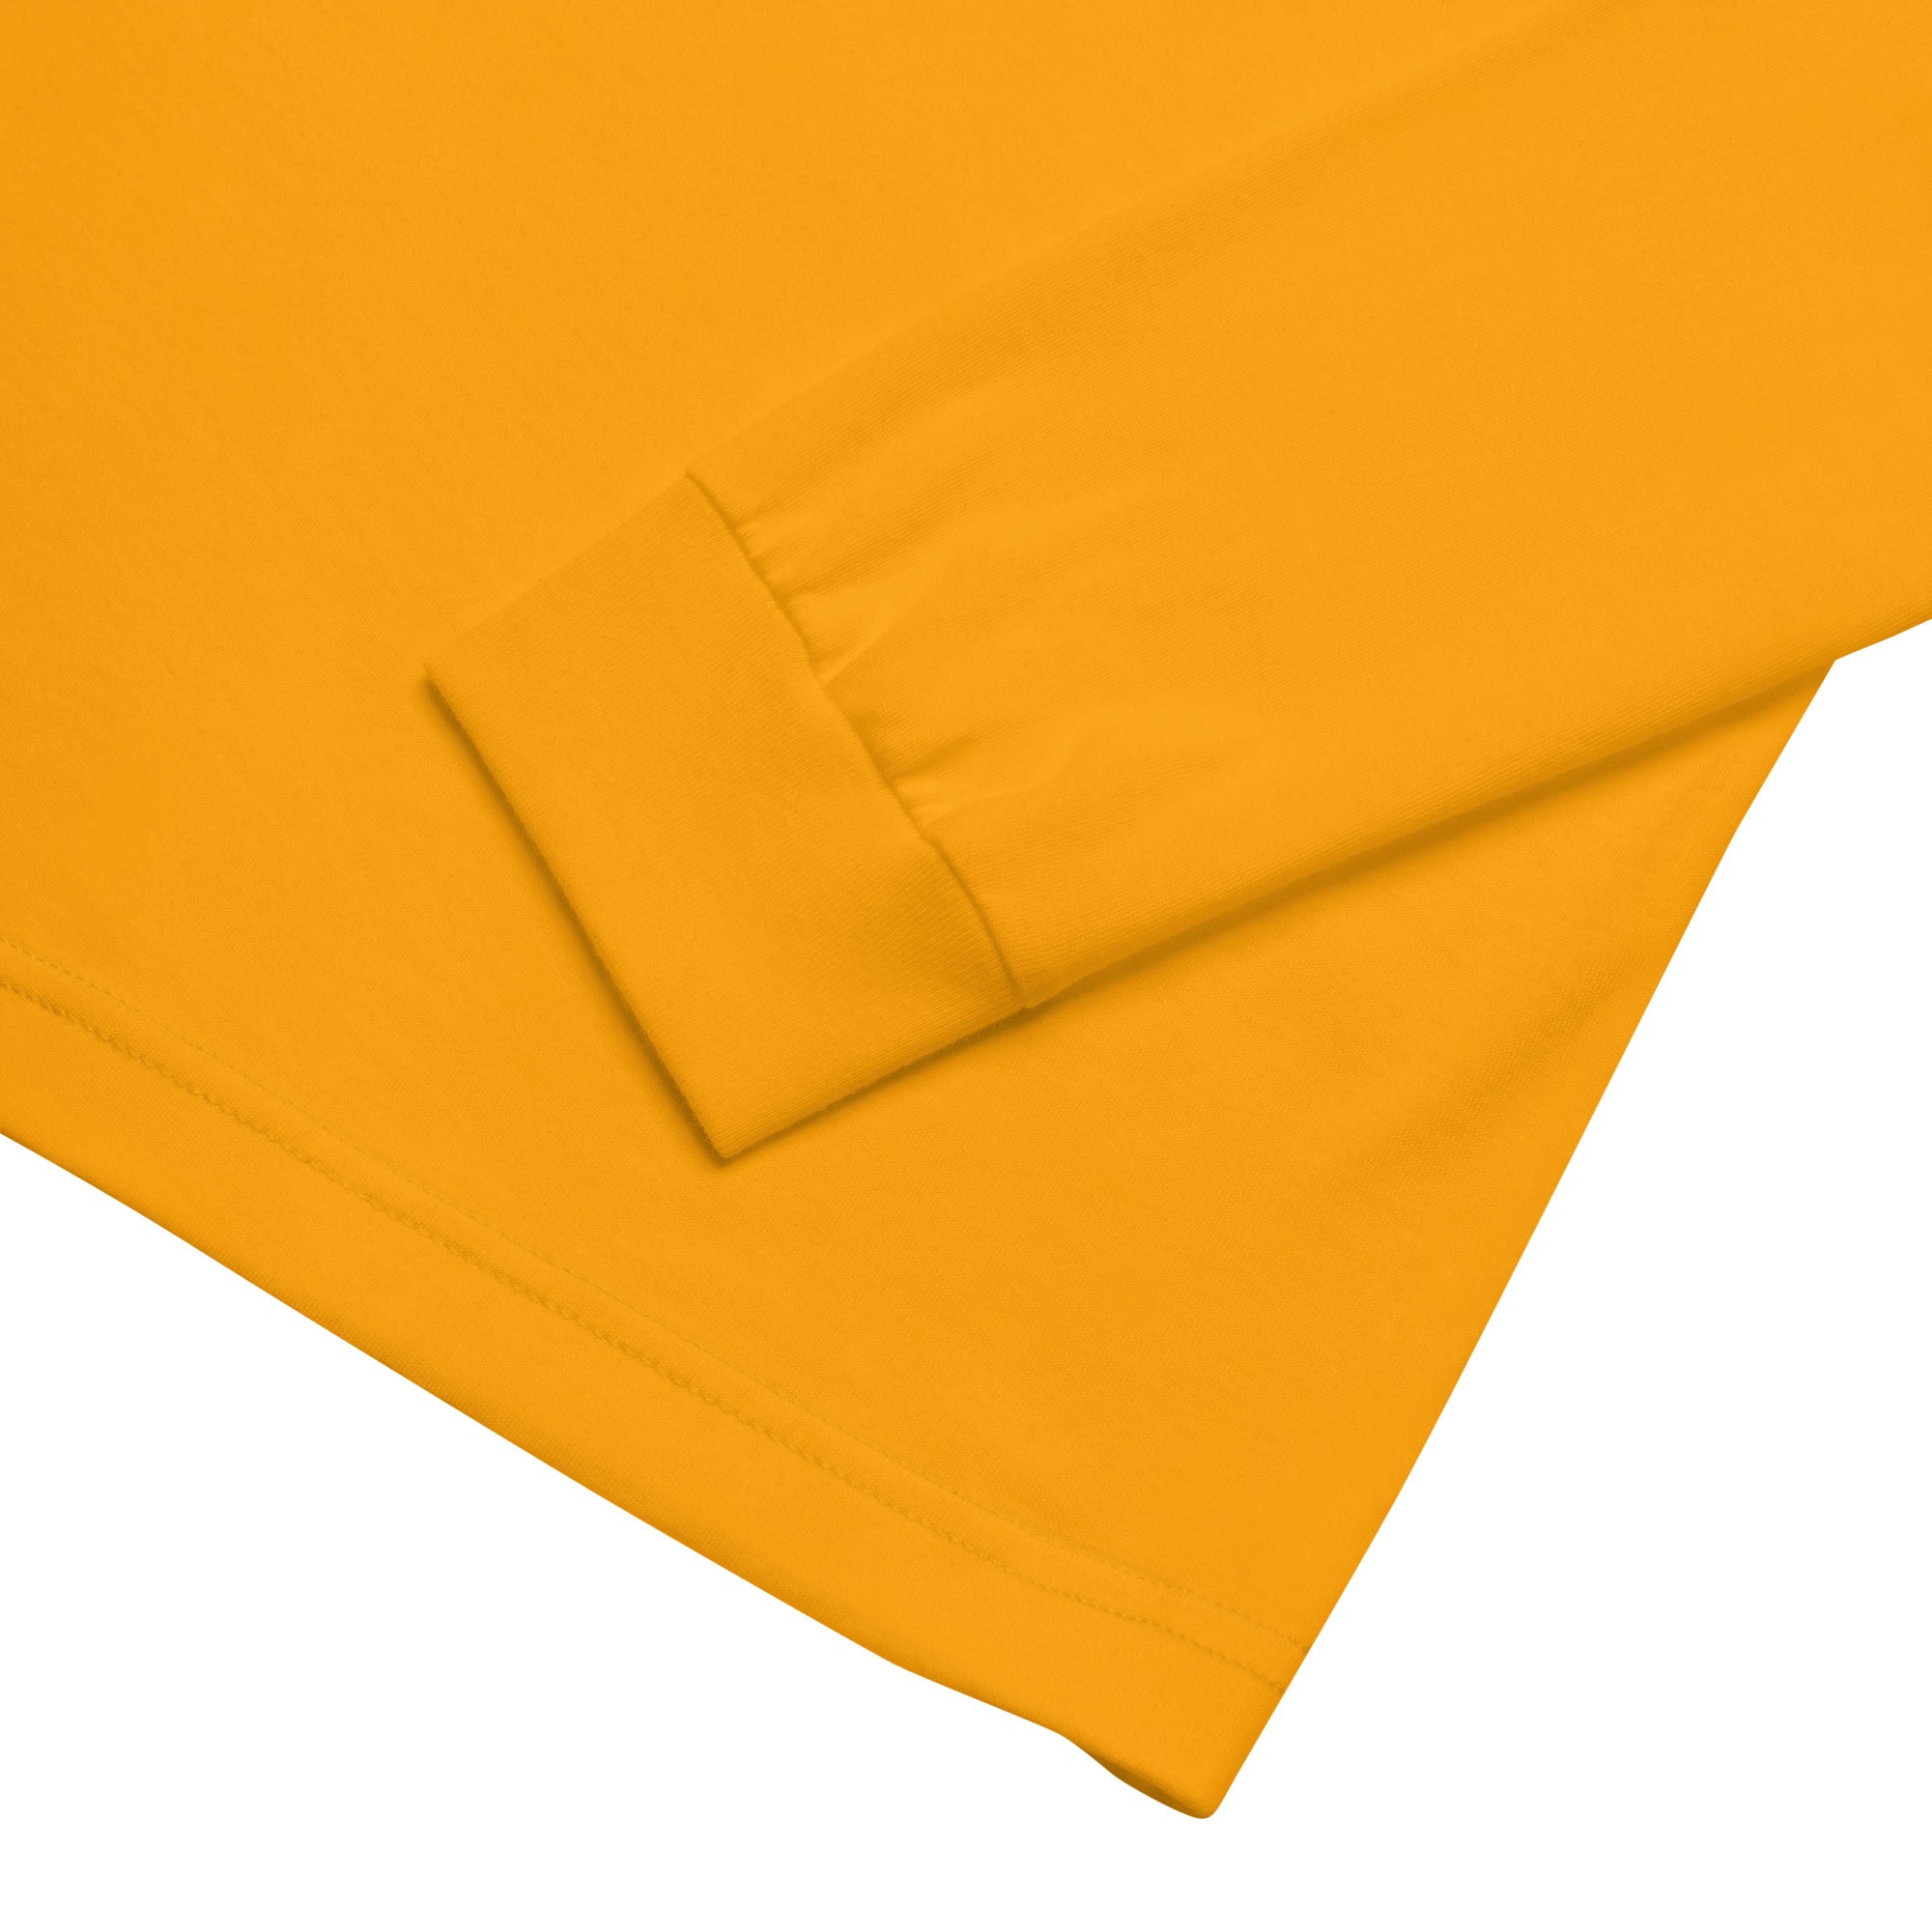 Clishirt© Yellow Fish Unisex Long Sleeve Tee